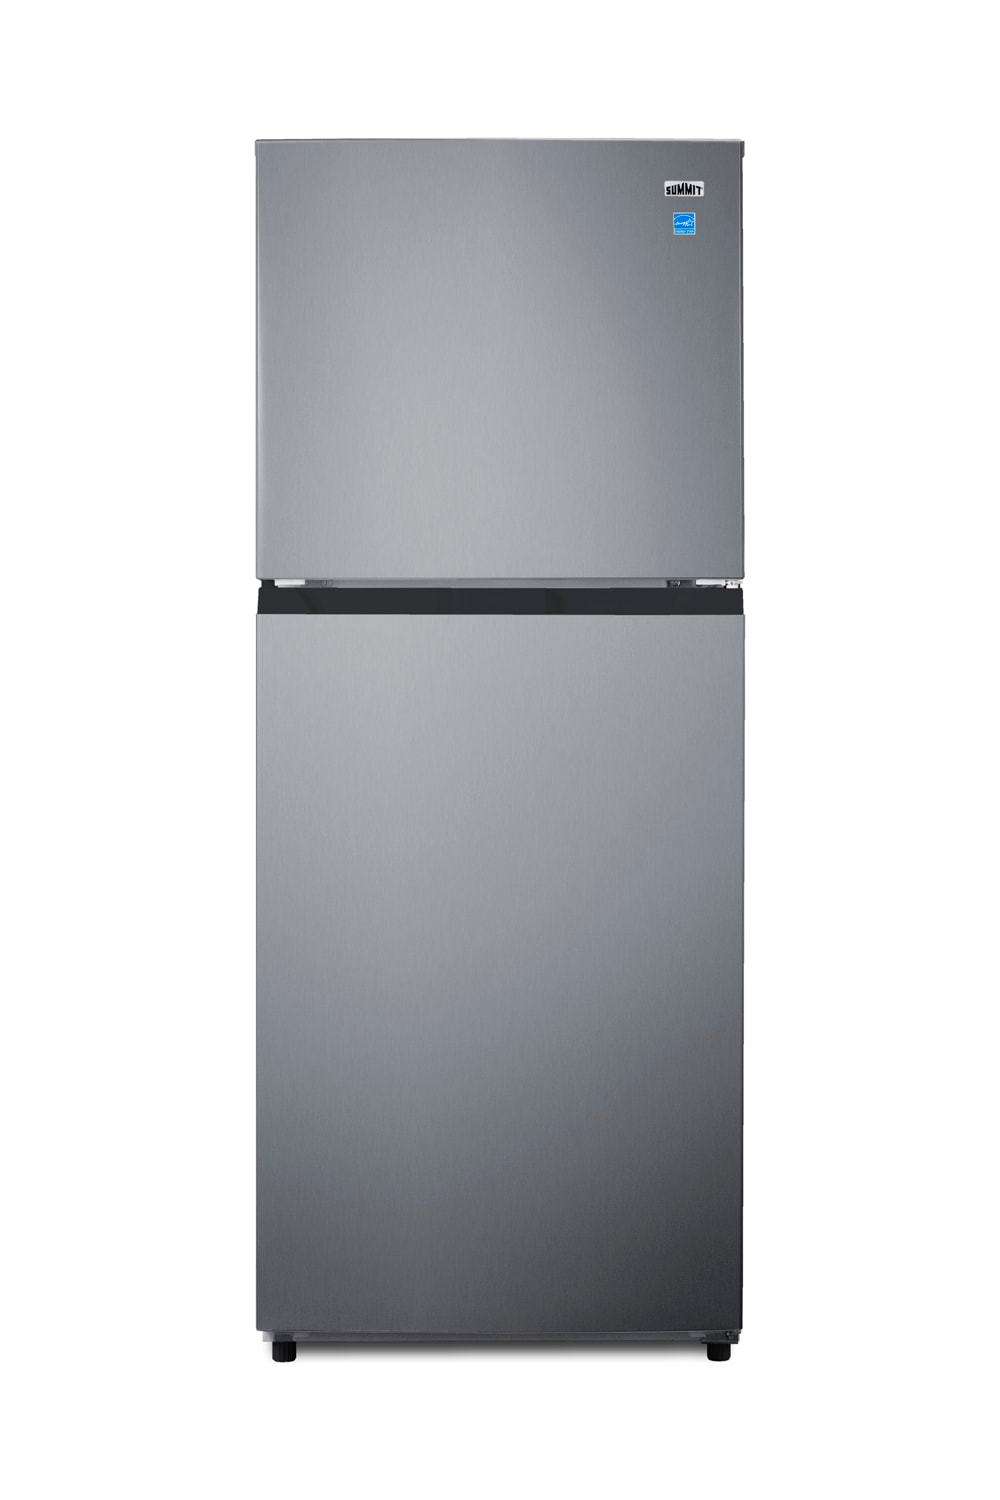 Summit Full Size Refrigerators Refrigeration Appliances - CP962